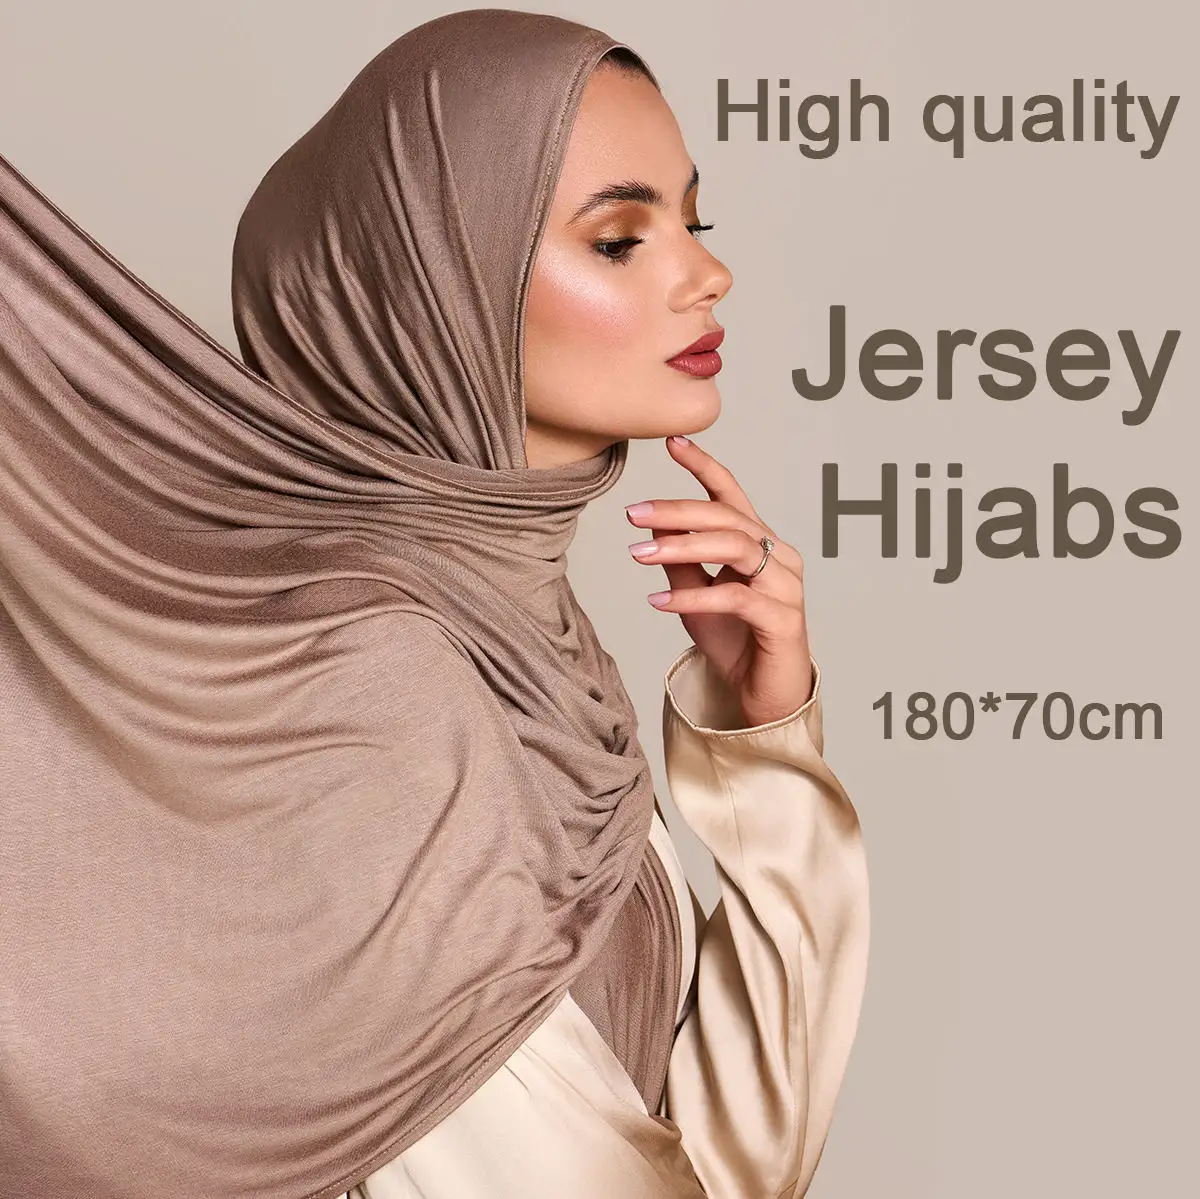 थोक उच्च गुणवत्ता वाली महिला मुस्लिम शॉल रैप सादे हिजाब महिलाओं को महिलाओं के लिए हिजाब